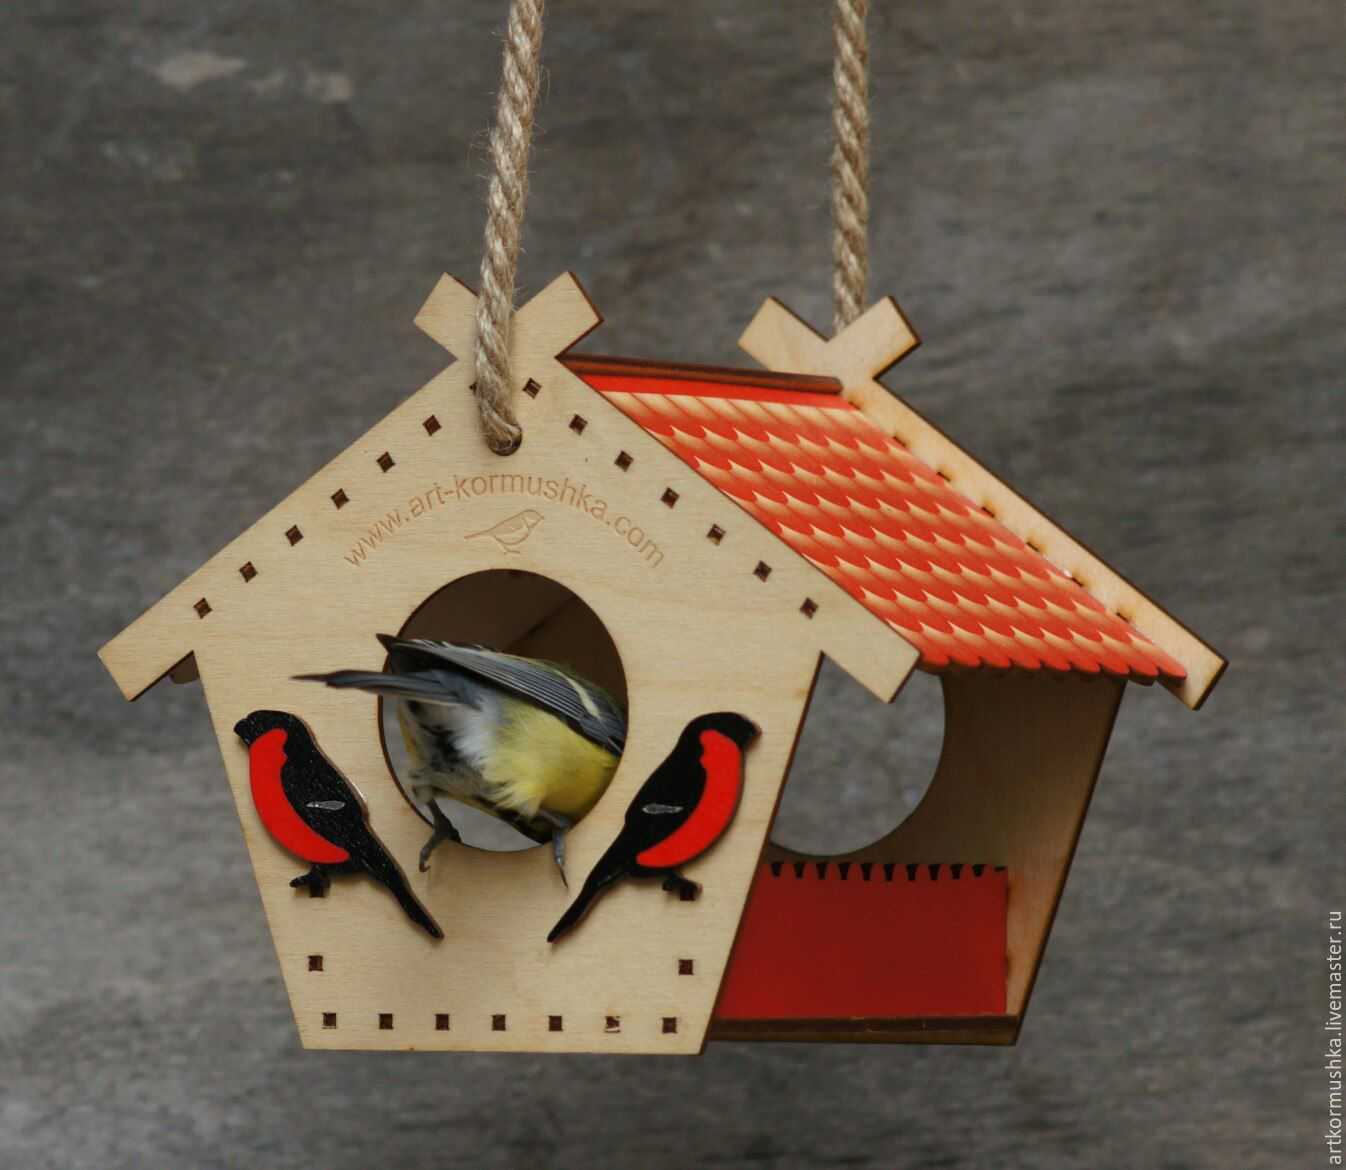 Кормушка для птиц своими руками - 72 фото идеи кормушек из подручных средств